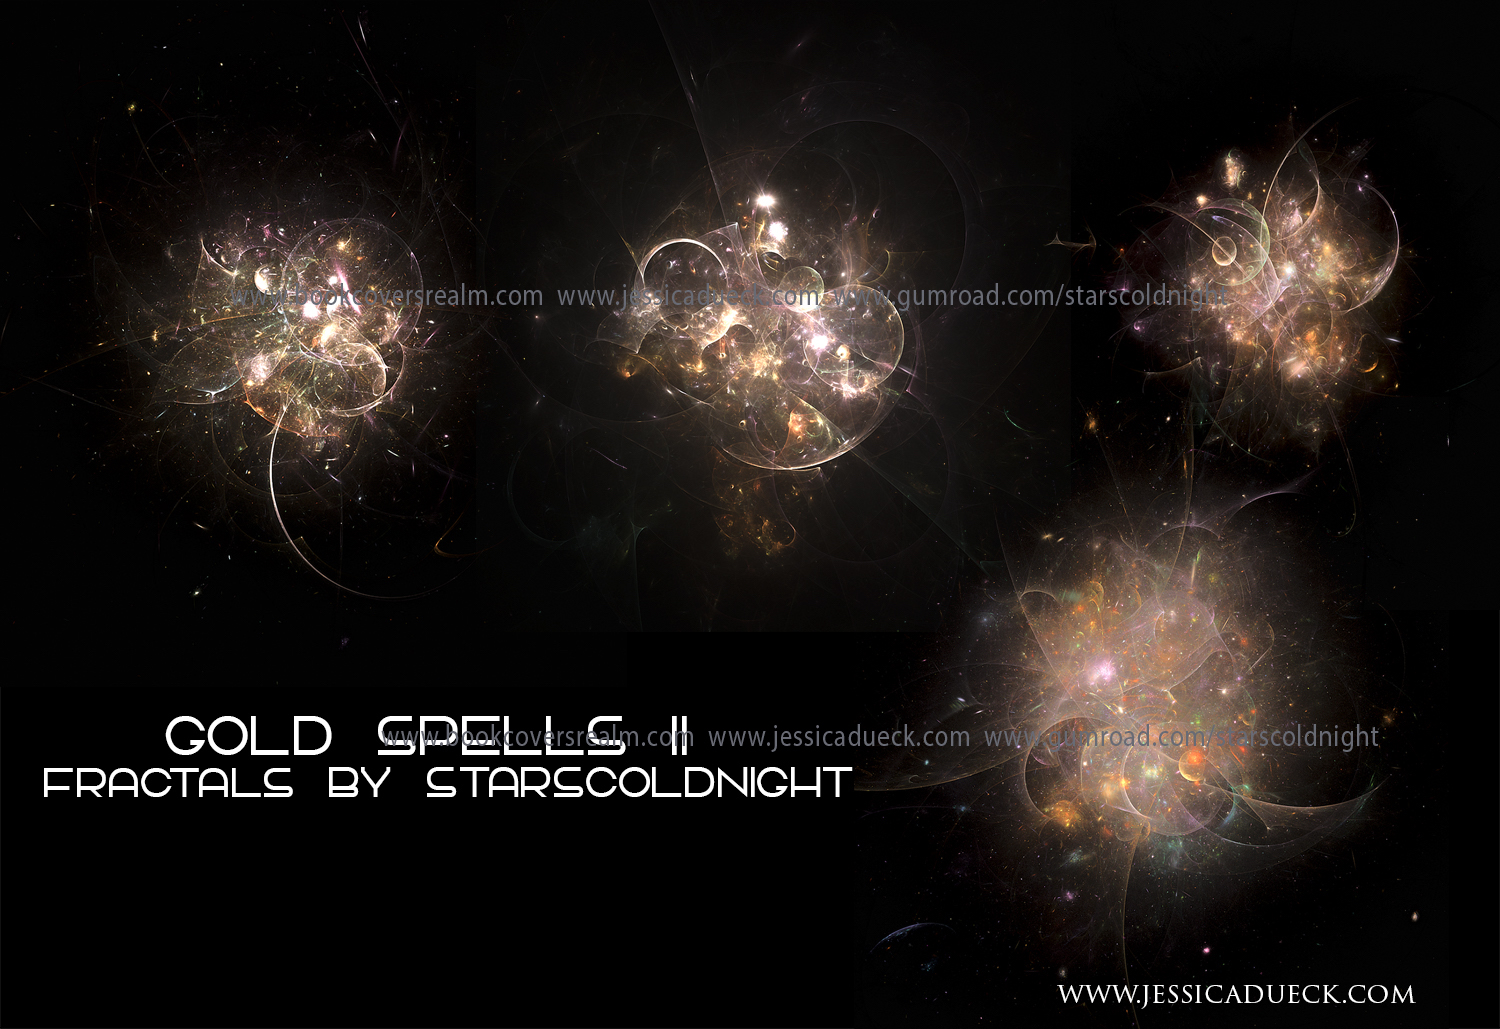 Gold spells II fractals by starscoldnight